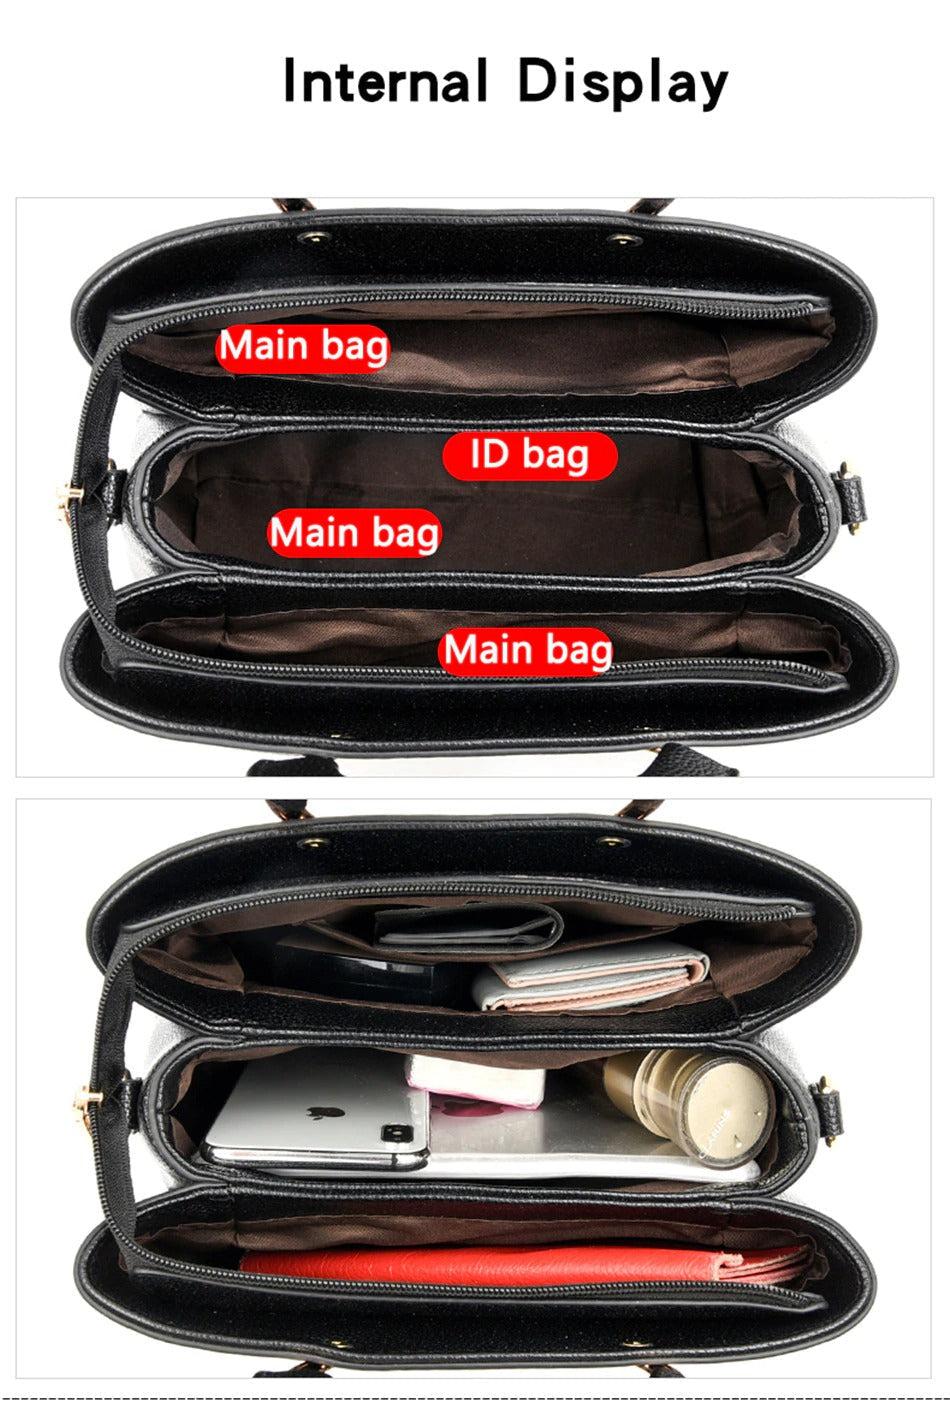 Medium Classical Leather Handbag - Black